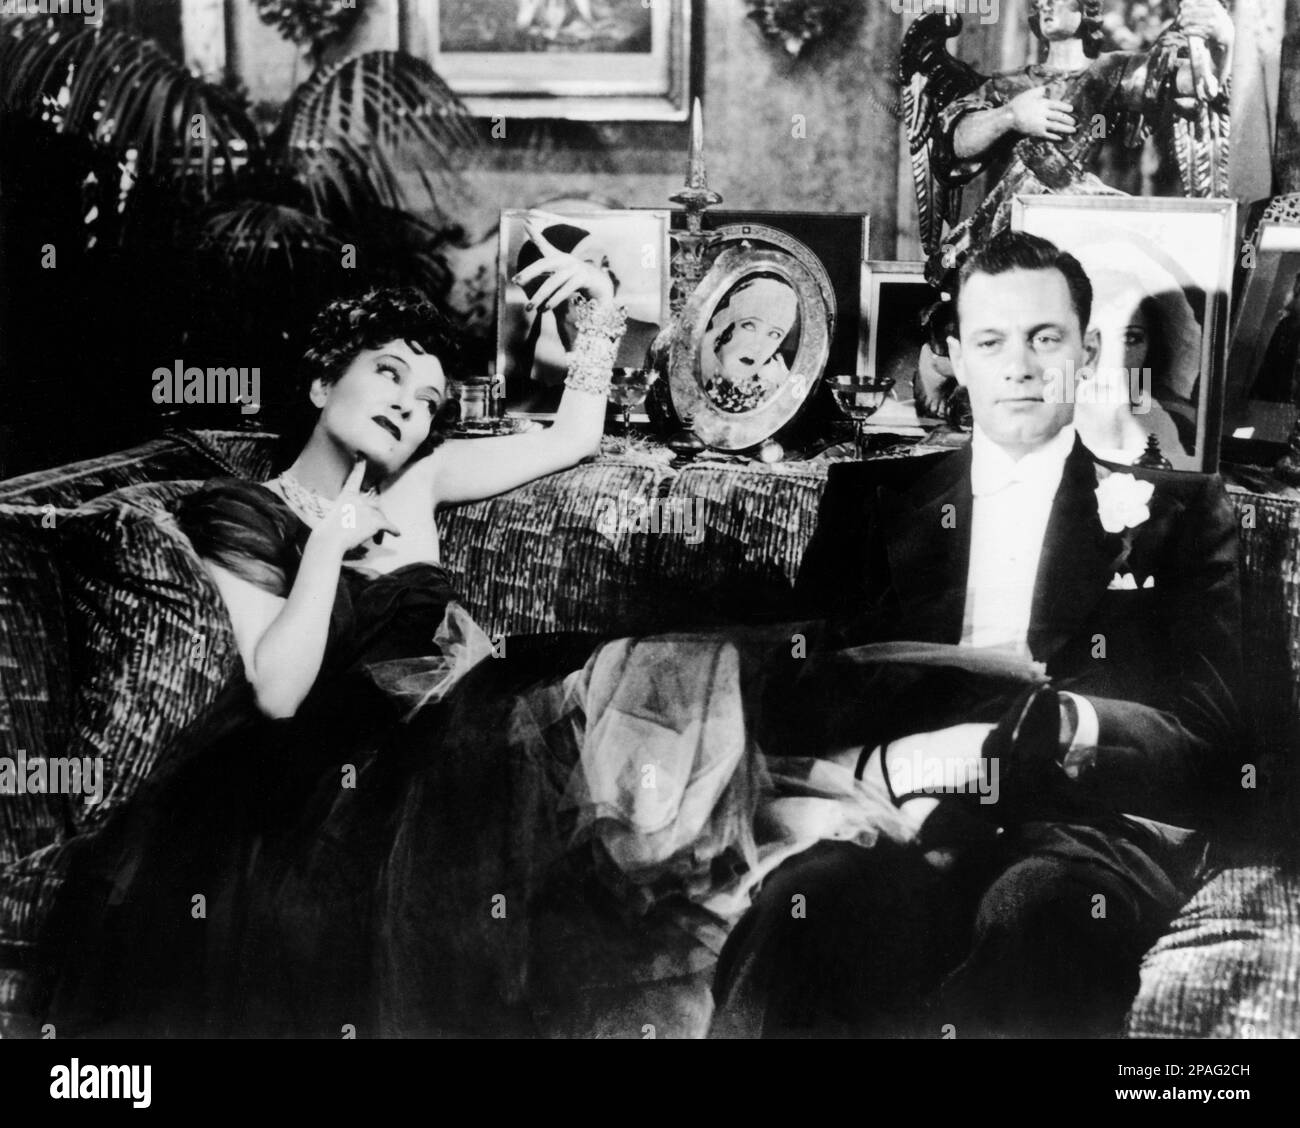 1951 : l'actrice Gloria SWANSON ( Chicago 1898 - New York 1983 ) comme Norma Desmond dans SUNSET BOULEVARD ( Viale del Tramonto ) par Billy Wilder, avec WILLIAM HOLDEN , costume par Edith HEAD , Paramount pubblicity STILL - FILM - CINÉMA - attice cinematografica - VAMP - DIVA - DIVINA - DIVIN - Hollywood on Hollywood - assassina - tueur - imbécile - fou - pazza - pazzo - matto - malato di mente - FILM - canapé - divano - fumeurs - gioielli - gioiello - bijoux - bijou - bracelet - braccialetto - bracciale - collana - collier - scarpe - scarpa - chaussures - tulle --- ARCHIVIO GBB Banque D'Images